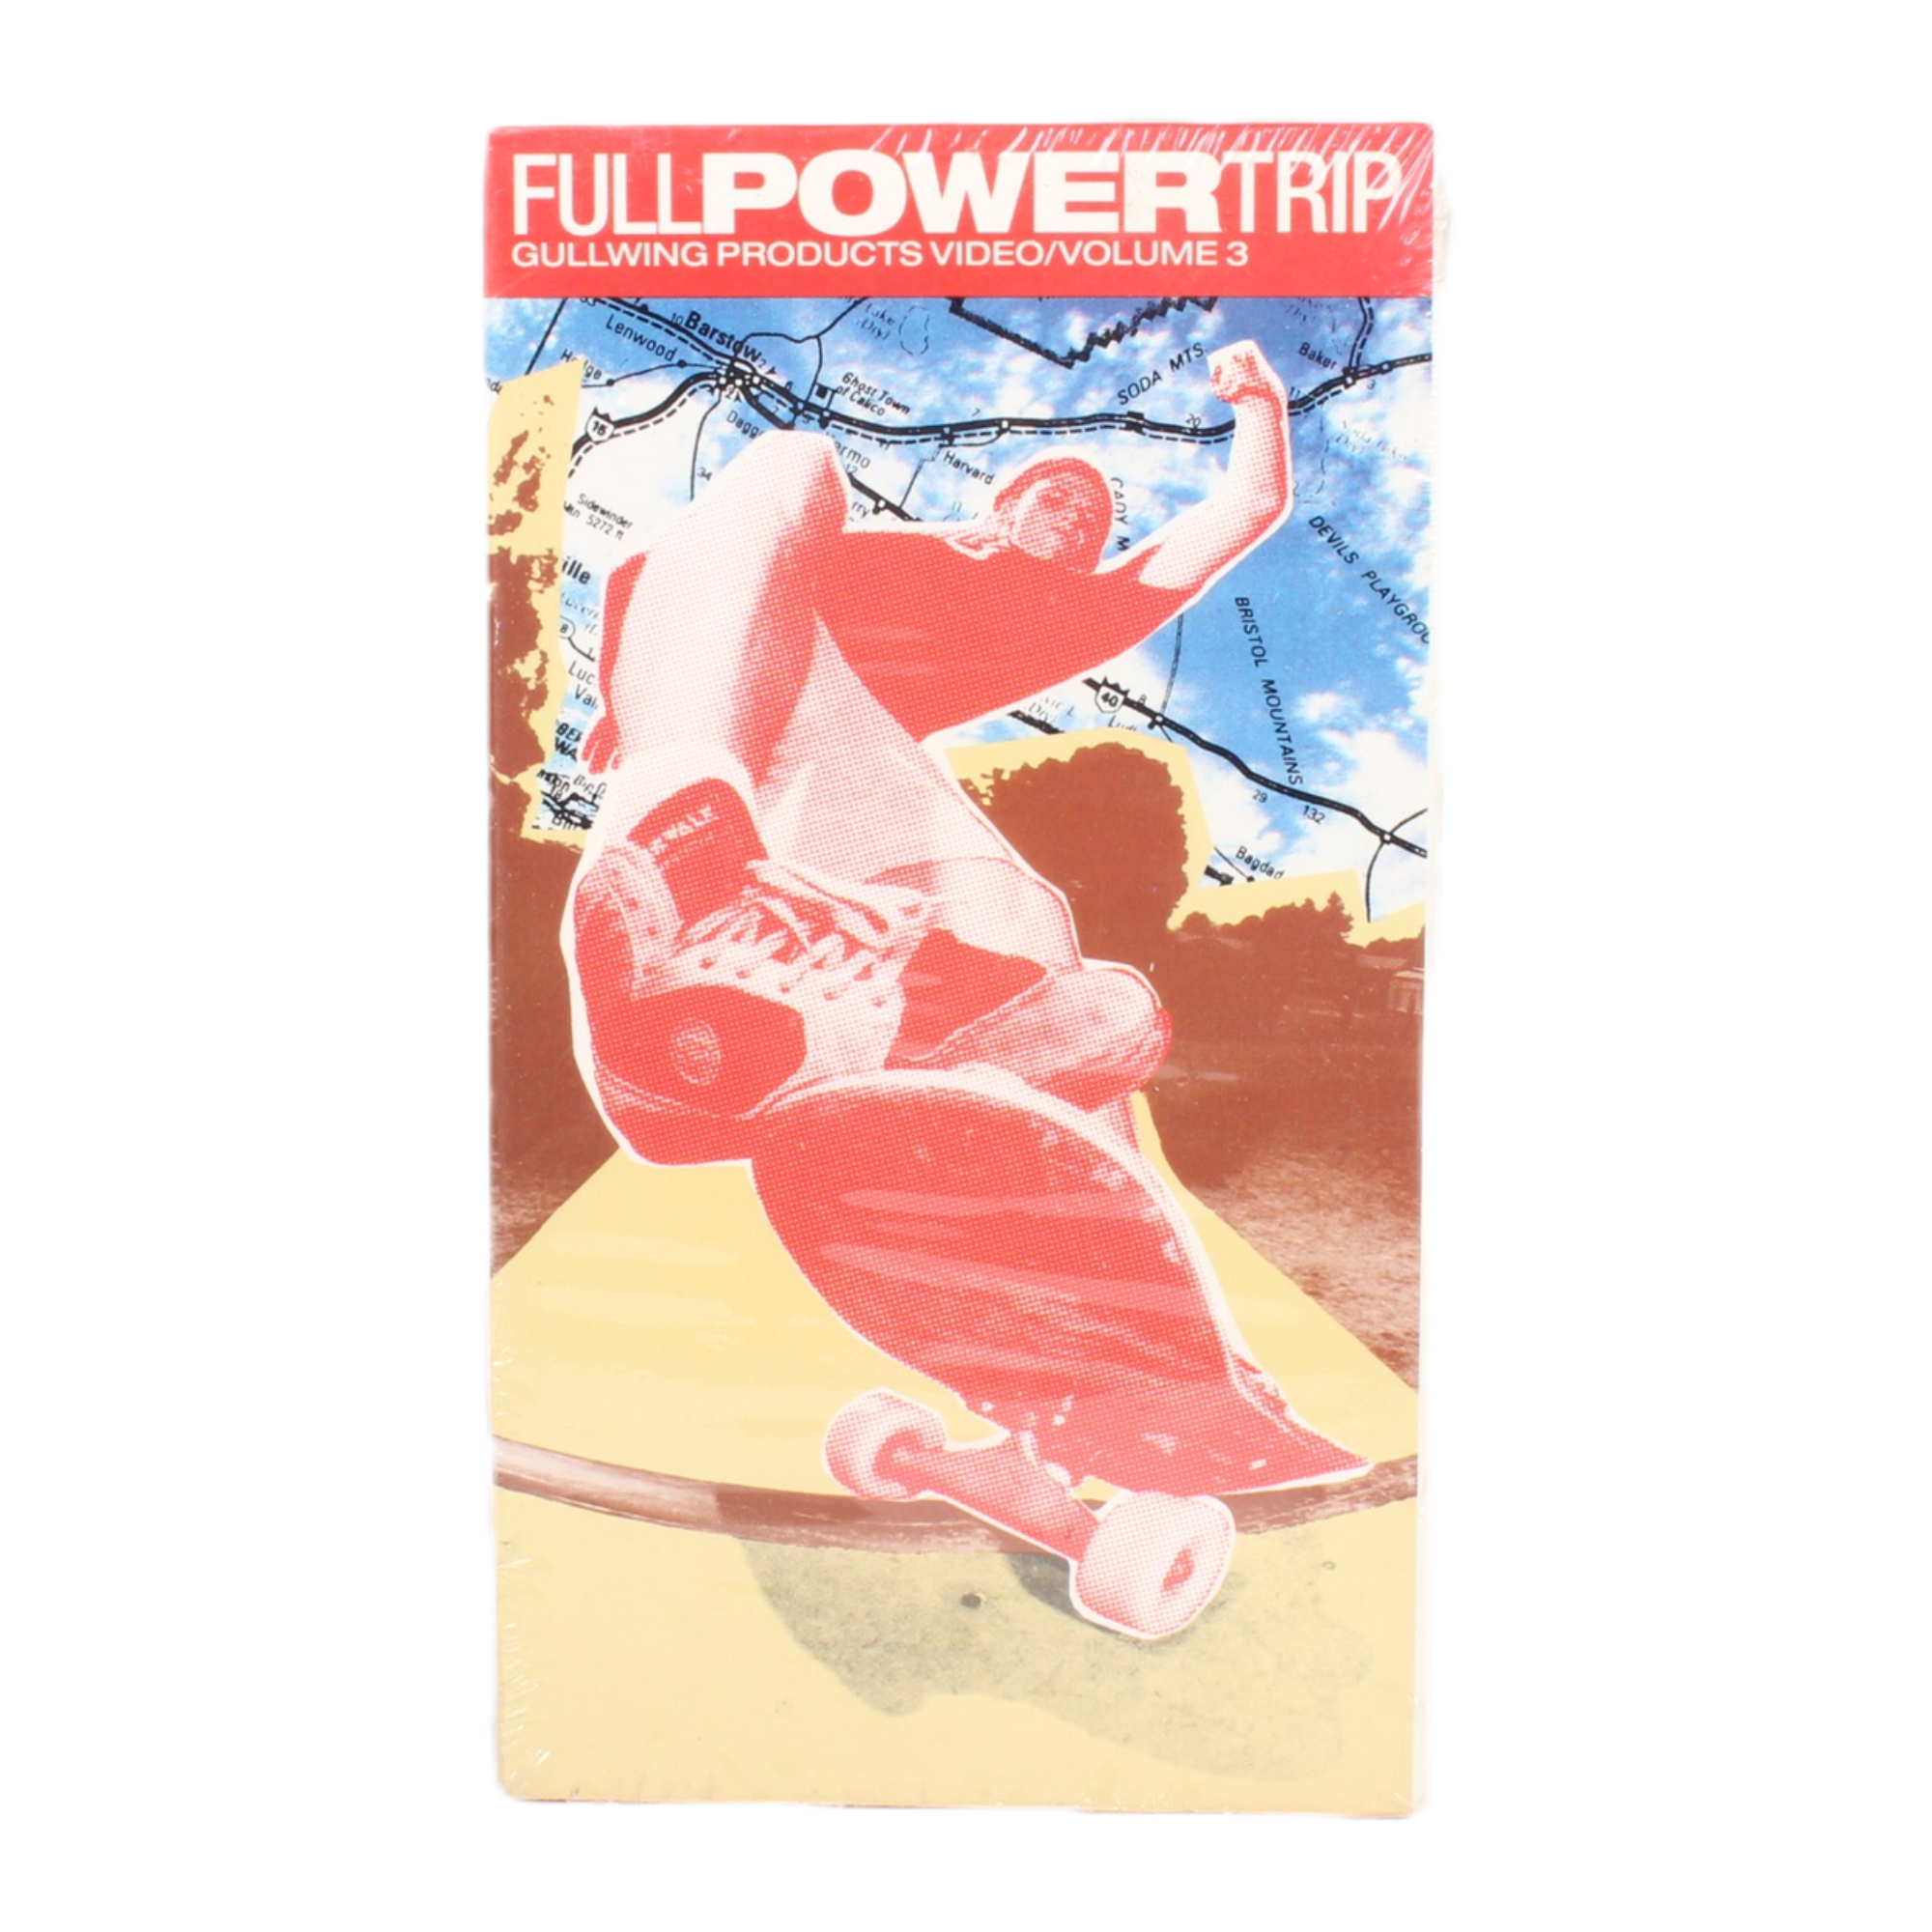 Gullwing Full Power Trip VHS (1990)